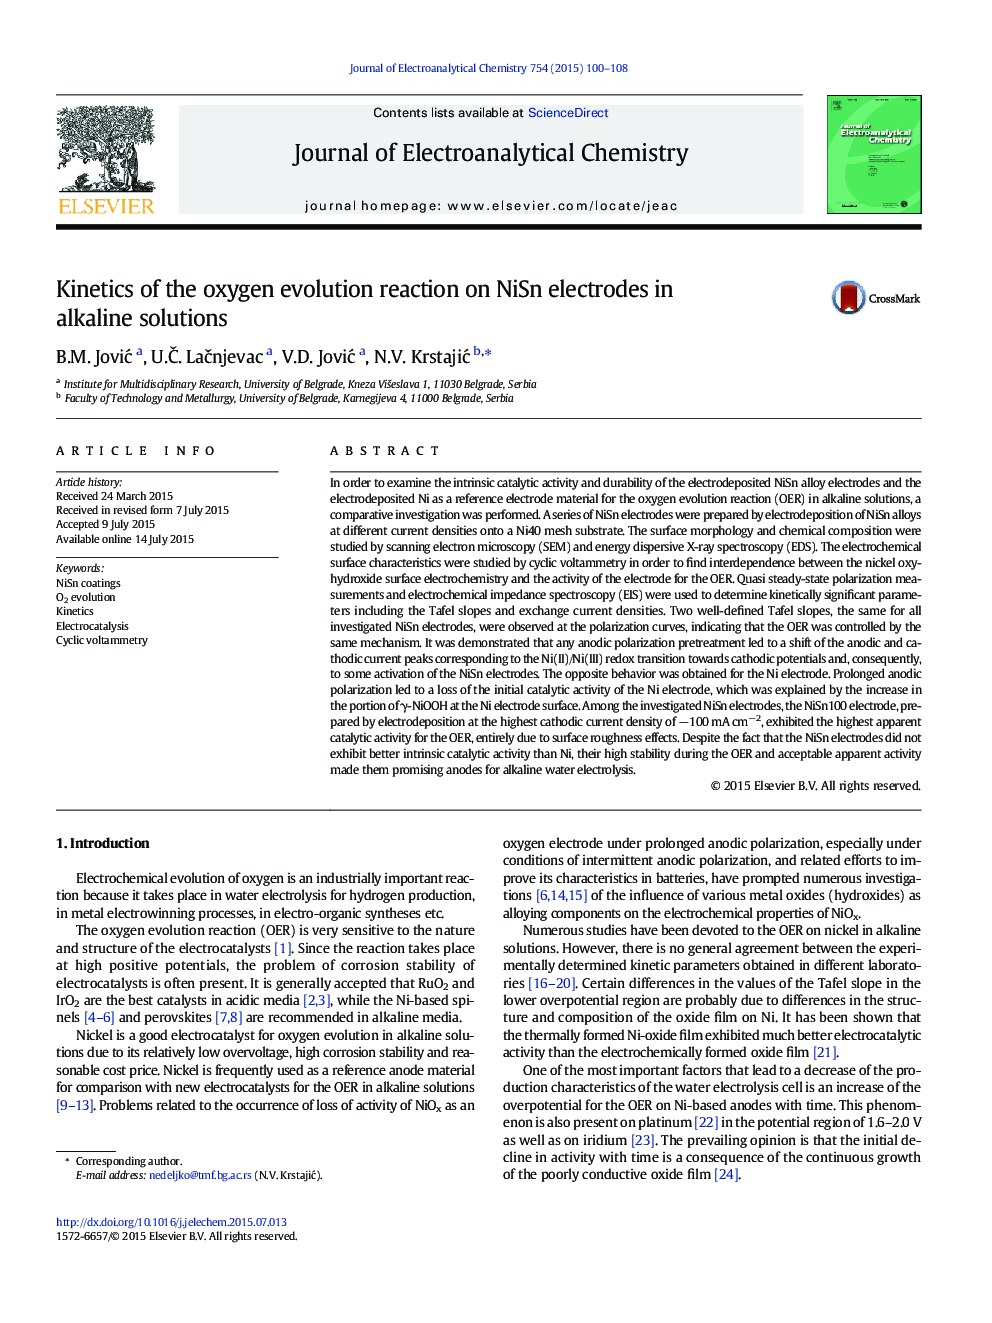 Kinetics of the oxygen evolution reaction on NiSn electrodes in alkaline solutions